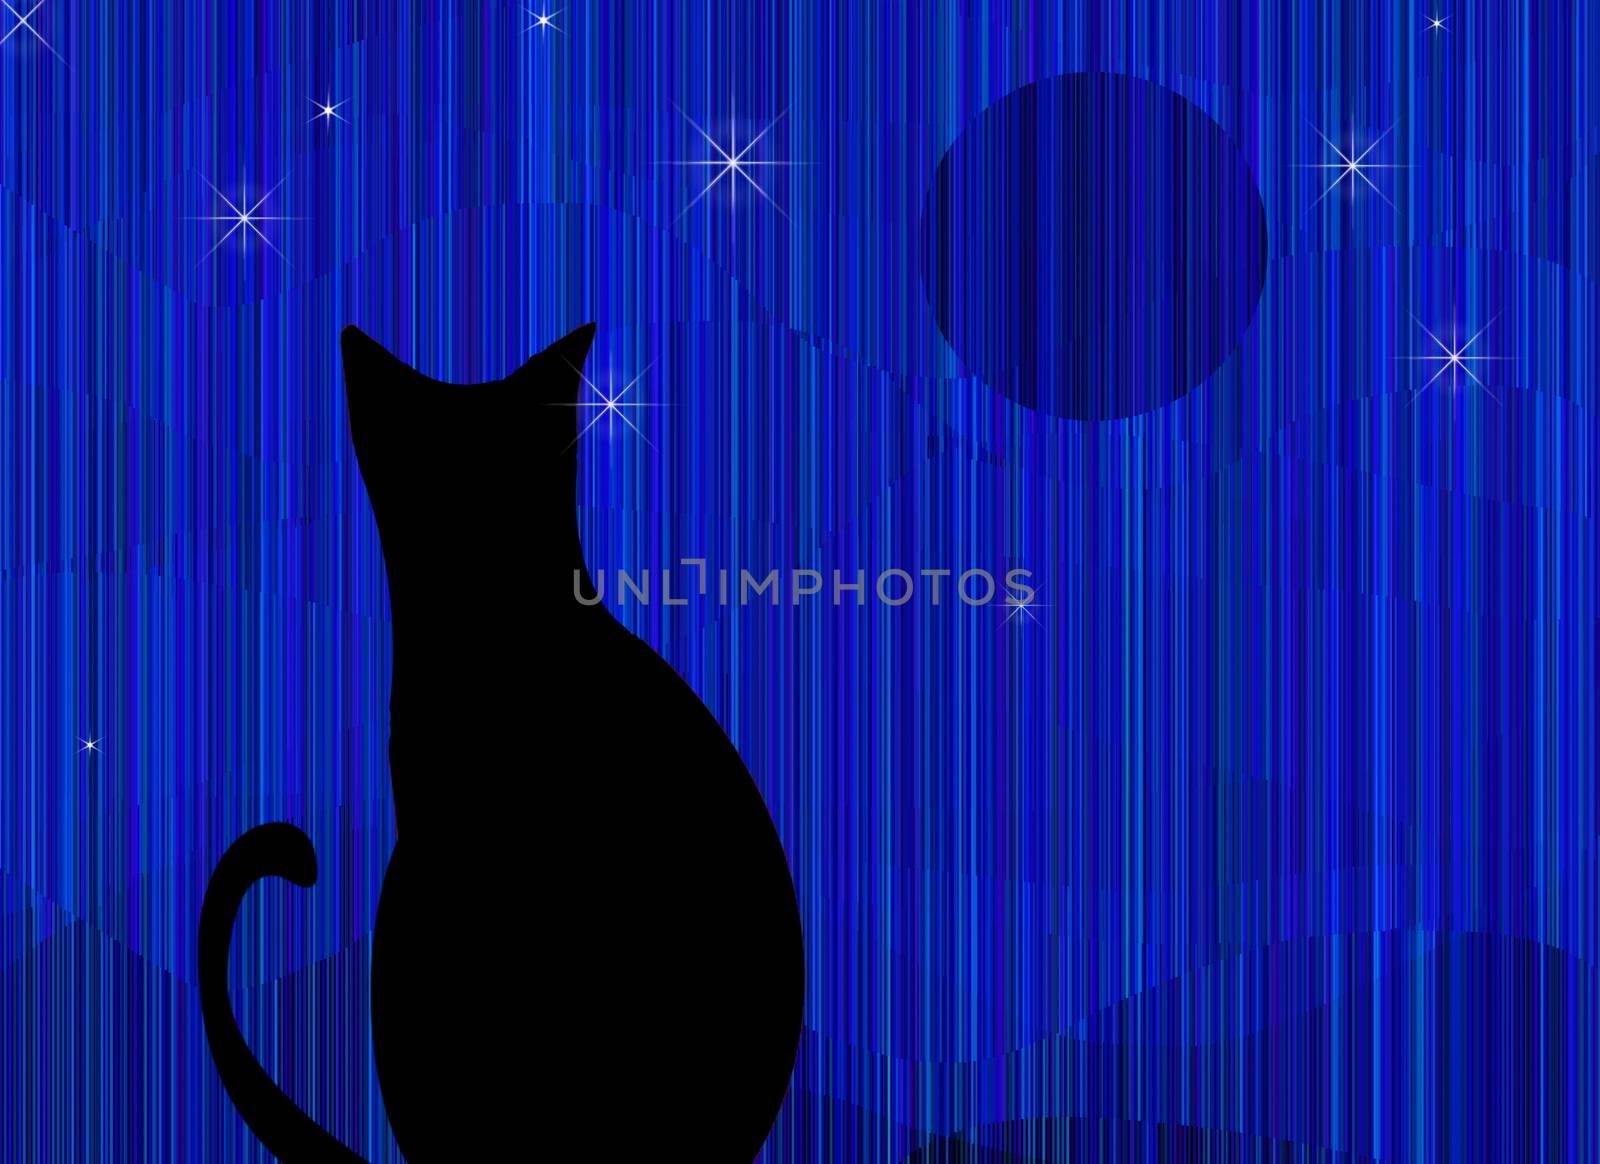 Black cat at night. Modern art